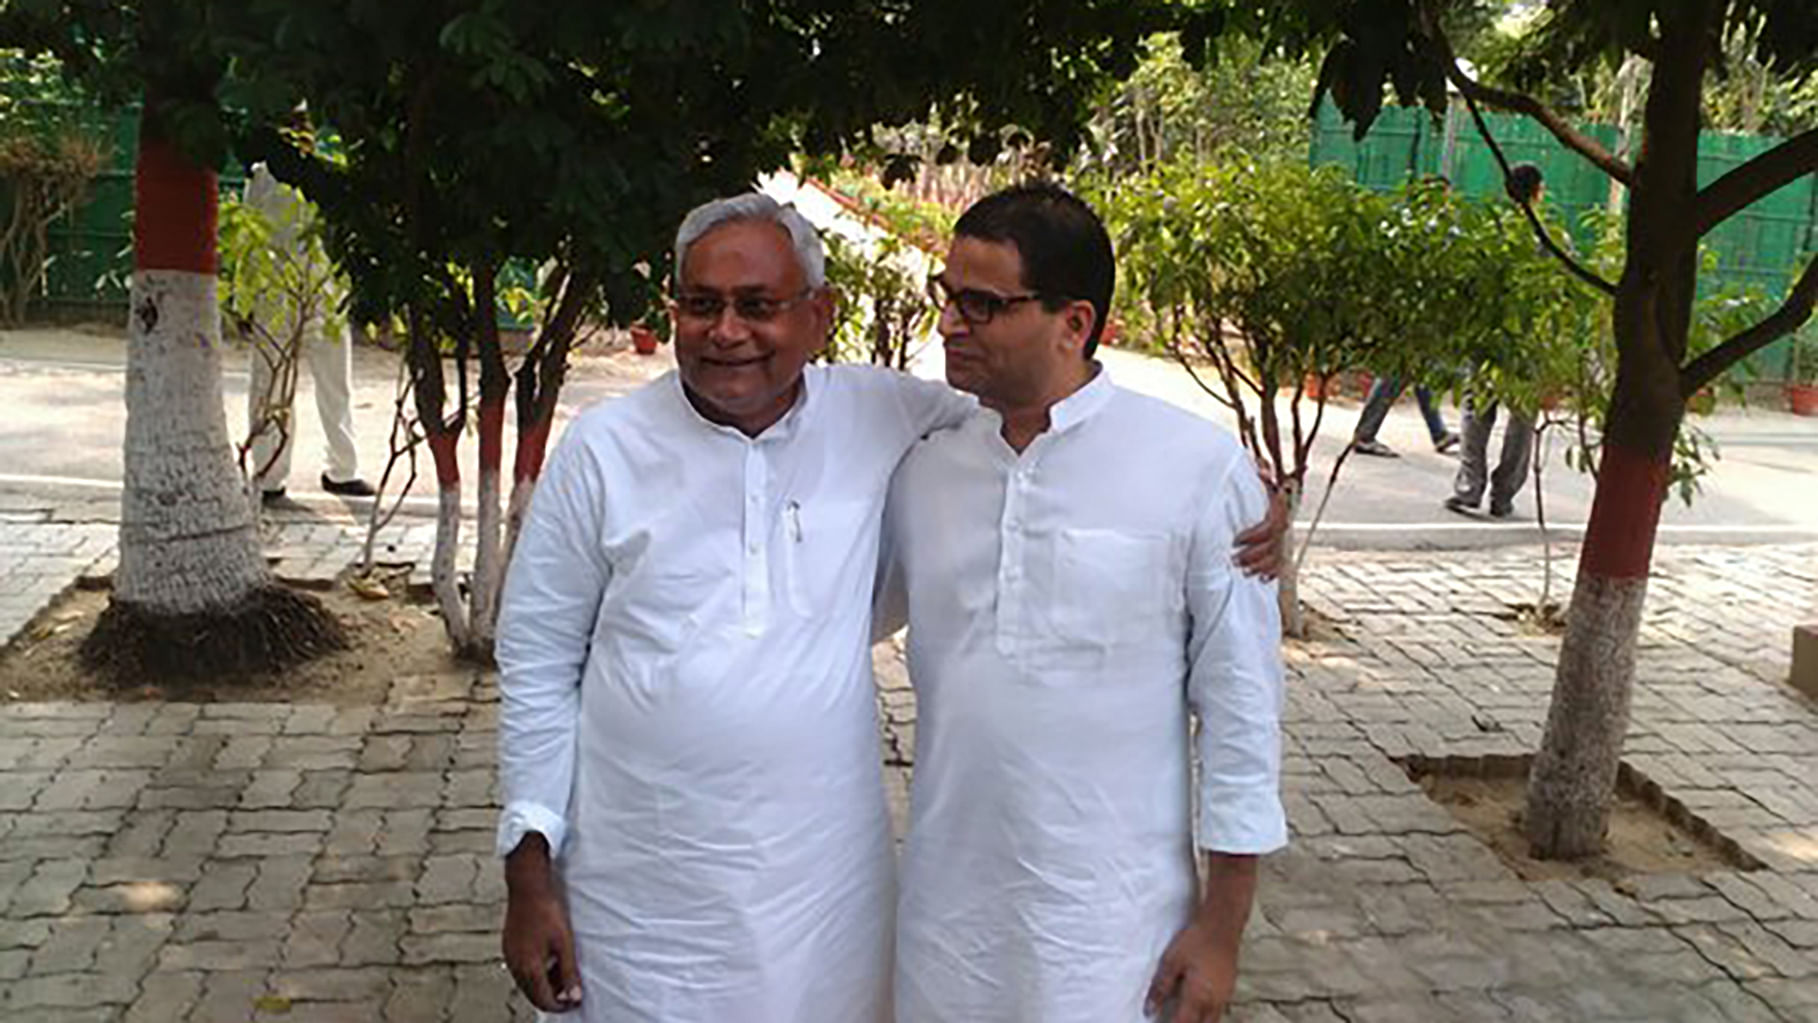 File photo of Nitish Kumar with Prashant Kishor during the 2015 Bihar Assembly elections.